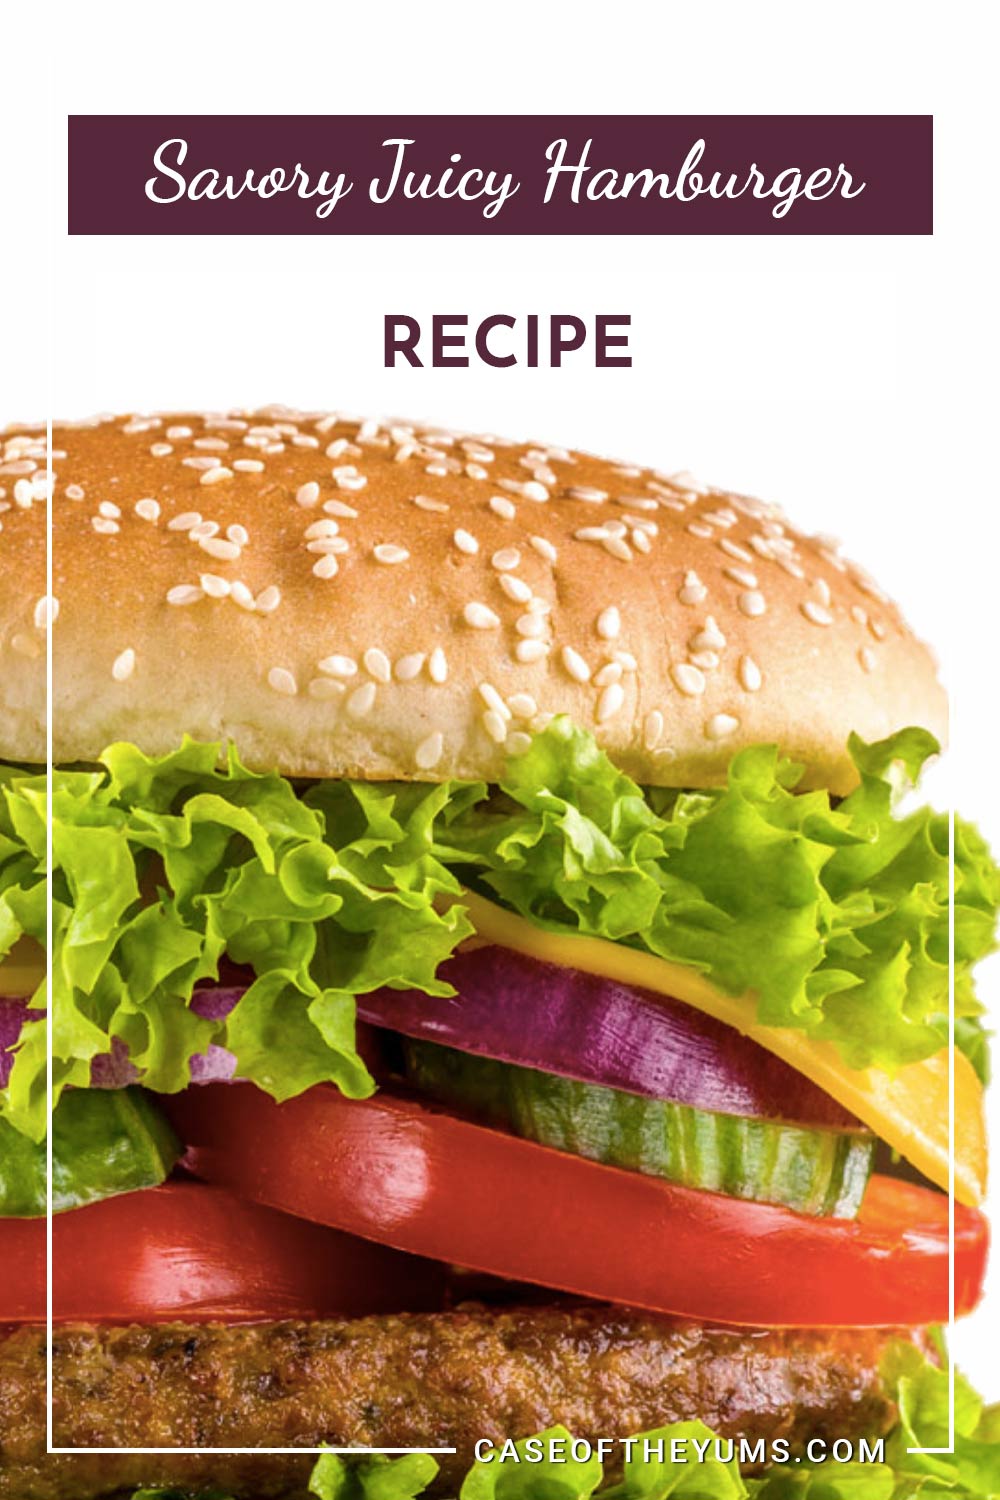 hamburger in front of a white surface - Savory Juicy Hamburger Recipe.